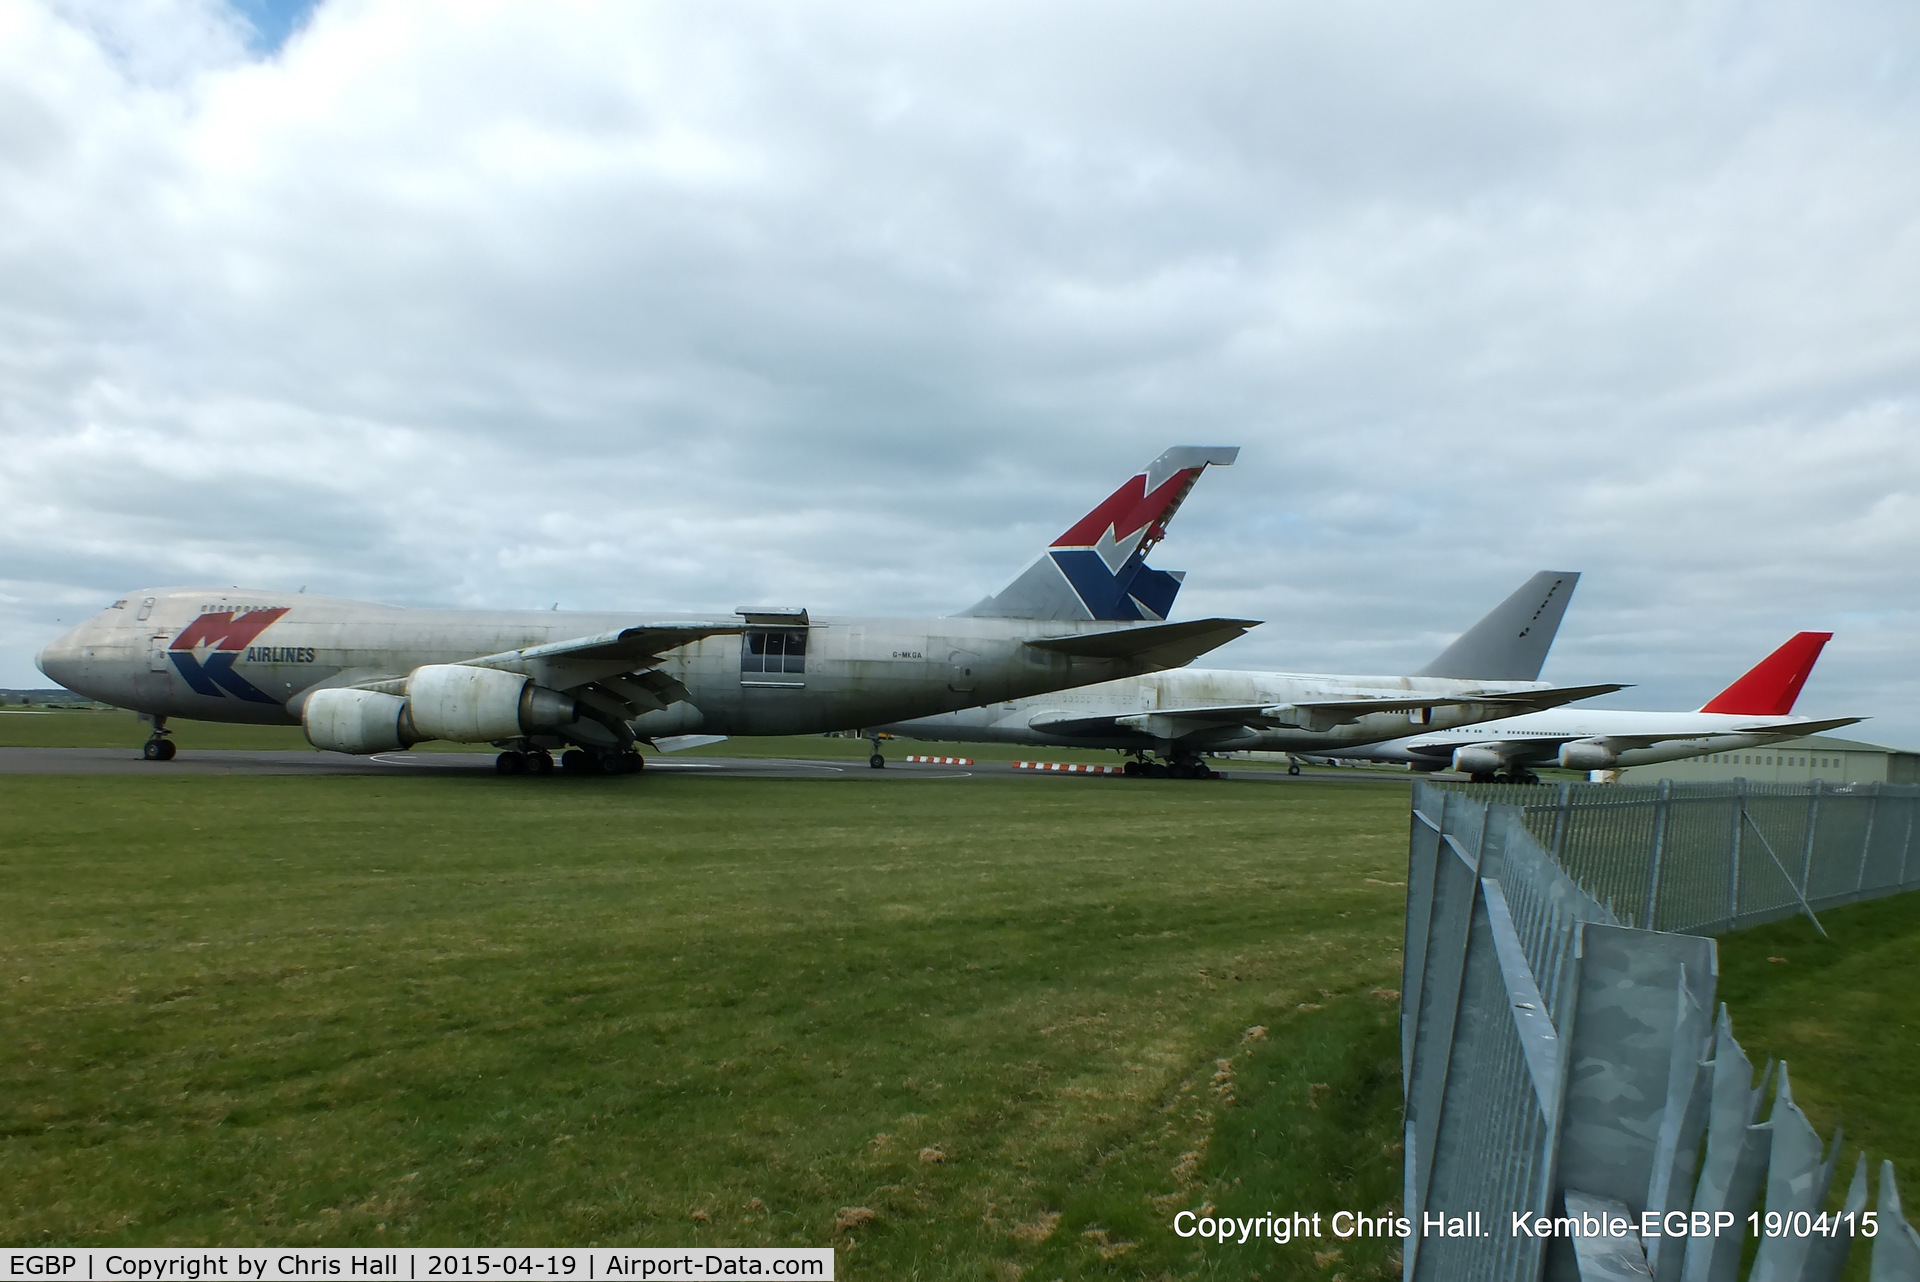 Kemble Airport, Kemble, England United Kingdom (EGBP) - 747's in storage at Kemble